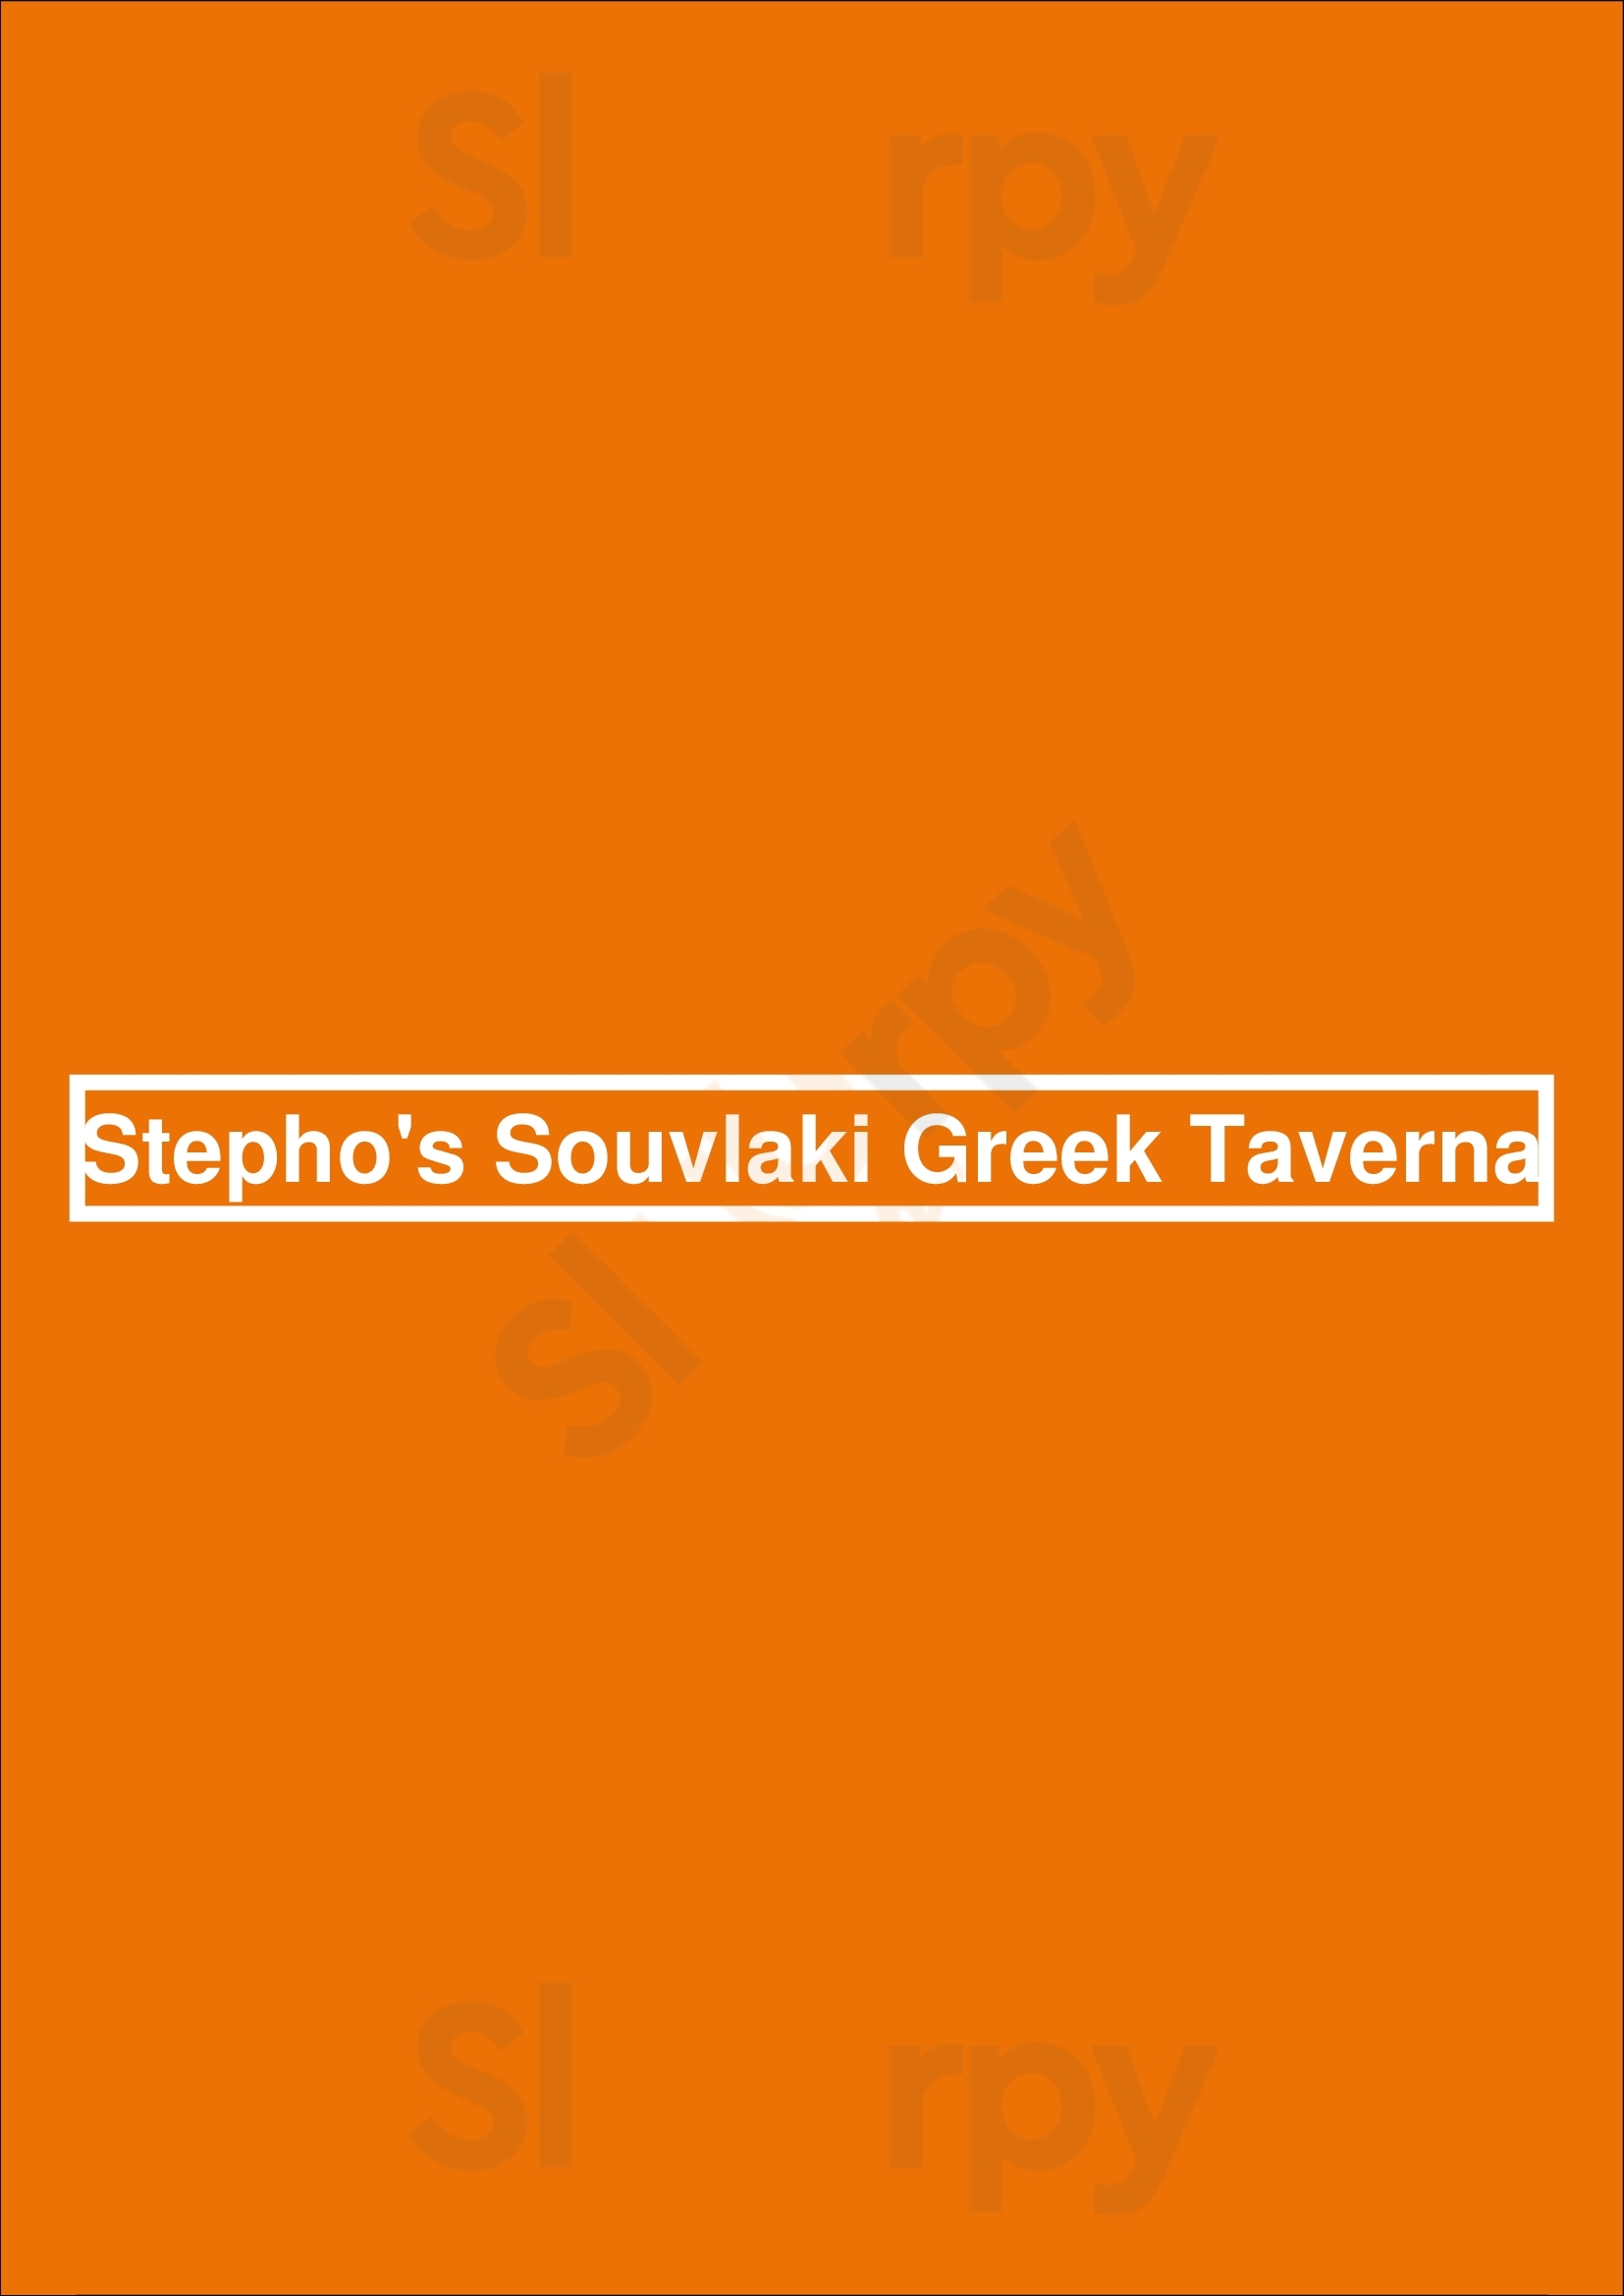 Stepho's Souvlaki Greek Taverna Vancouver Menu - 1